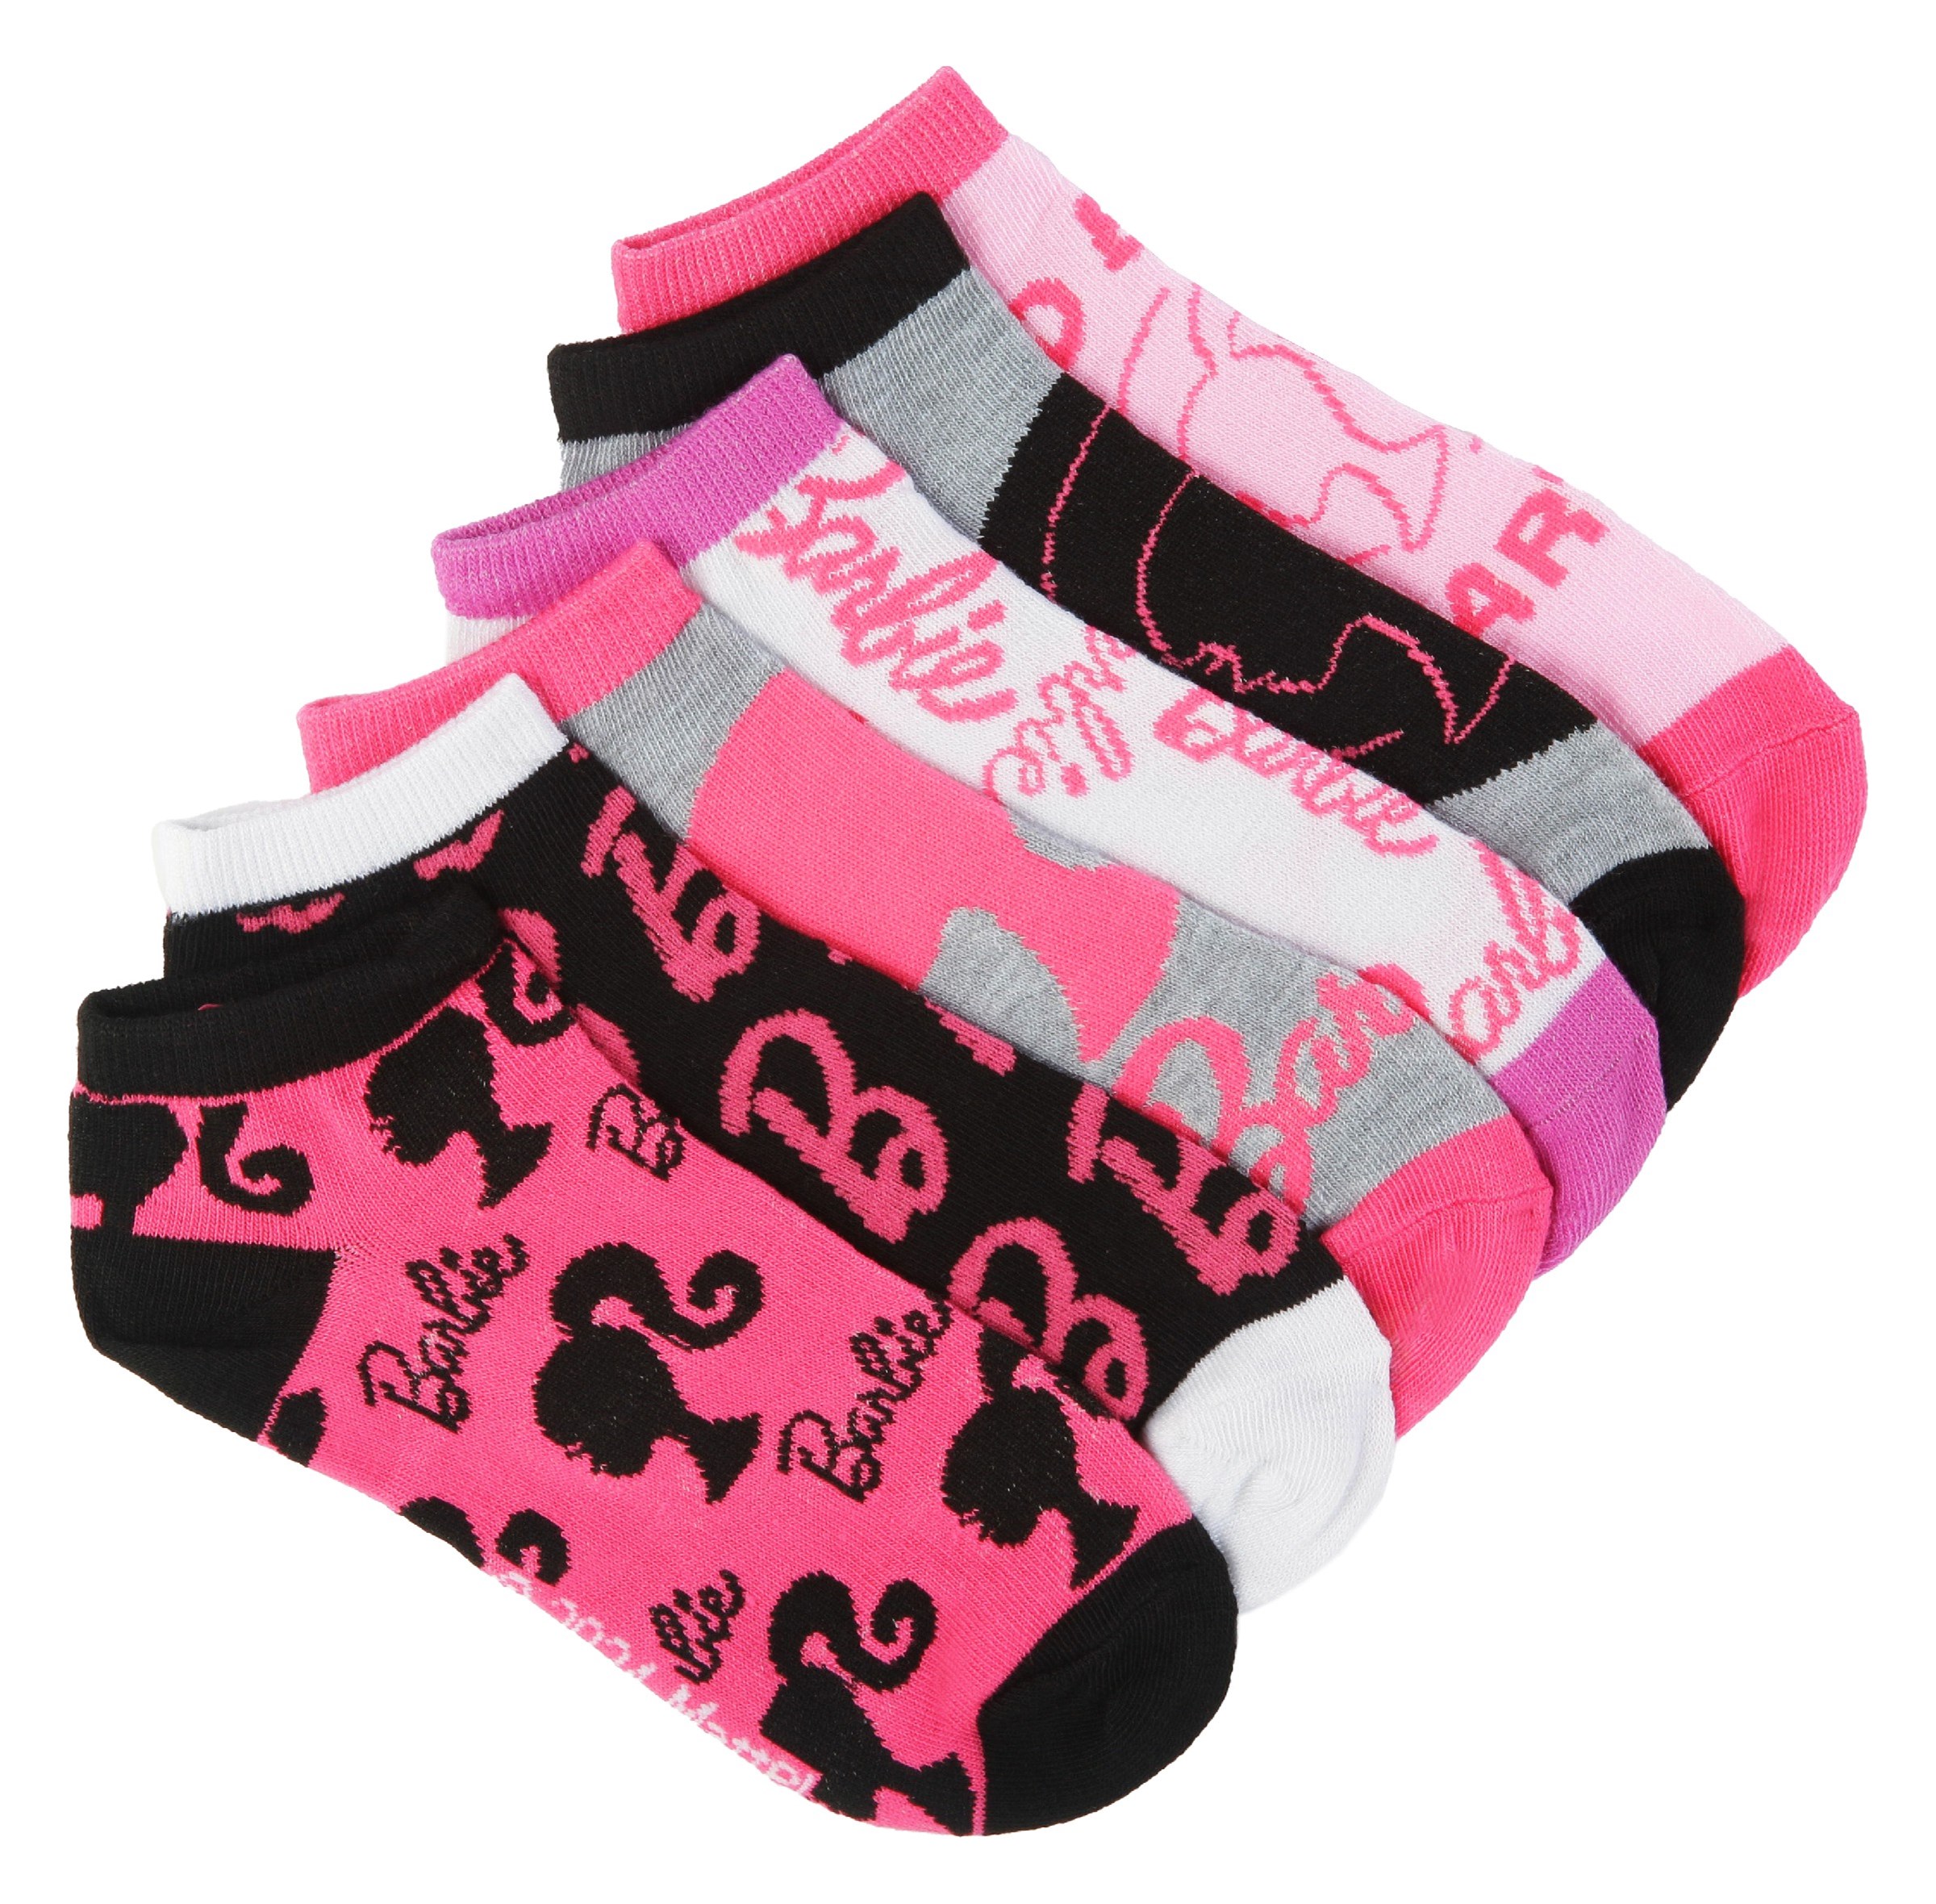 Barbie, Valentine's Day Women's No-Show Socks, 3-Pack, Size 4-10